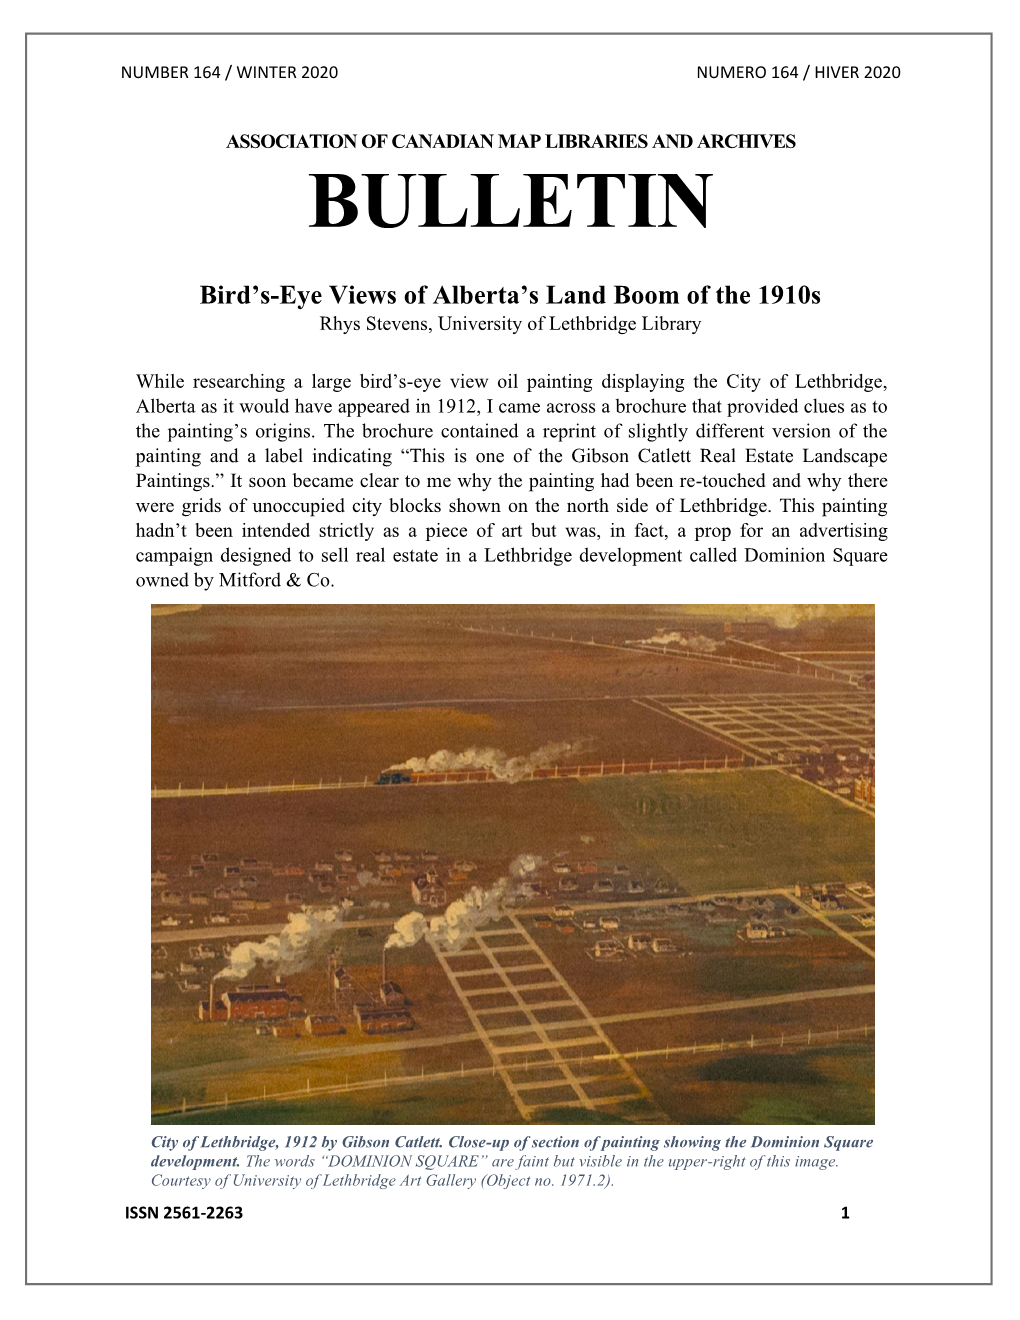 BULLETIN Bird's-Eye Views of Alberta's Land Boom of The